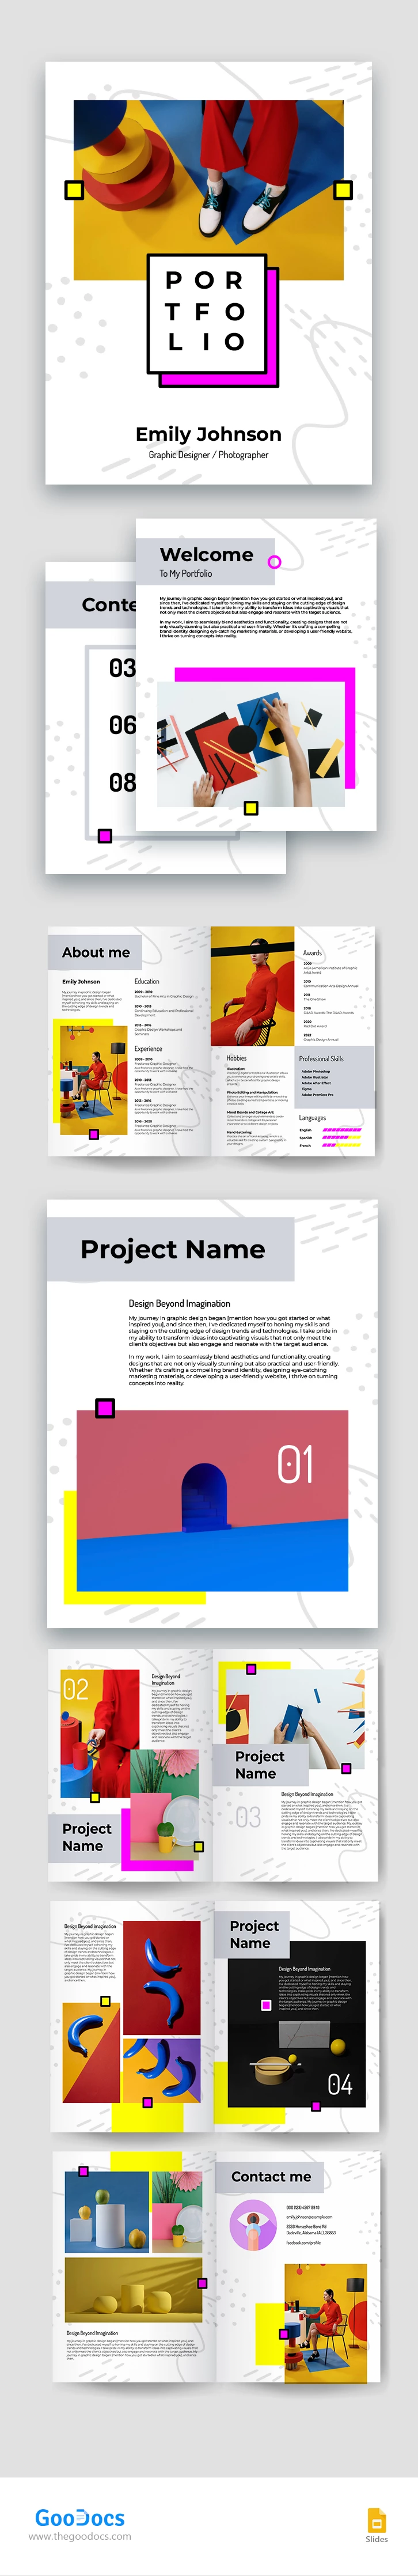 Creative Designer Portfolio - free Google Docs Template - 10067394